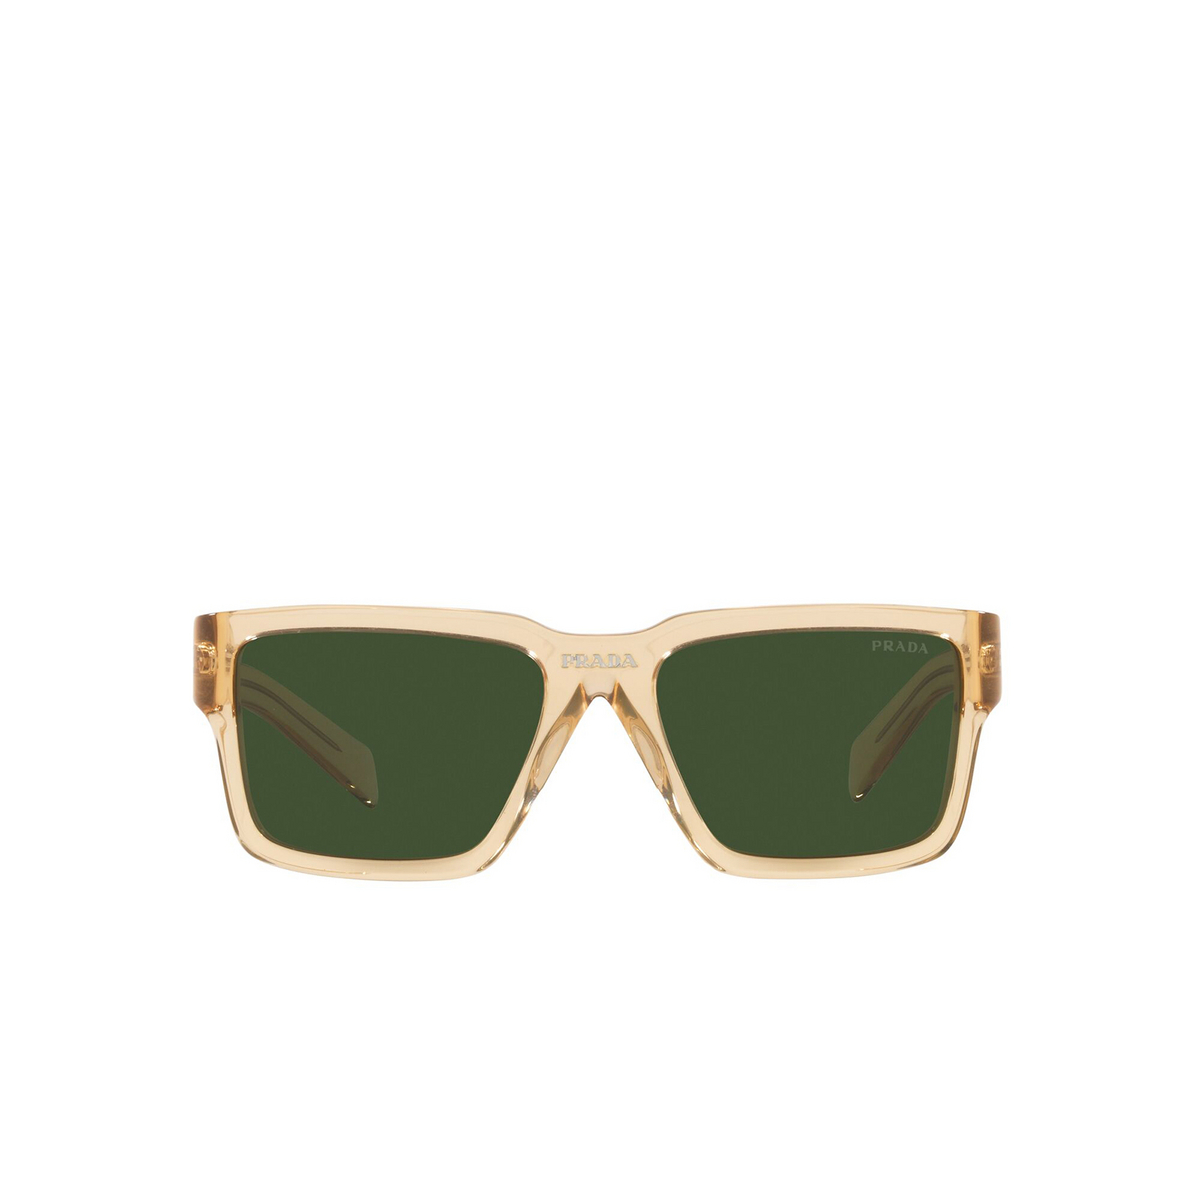 Prada® Square Sunglasses: PR 09YS color Amber Crystal 01N1I0 - front view.